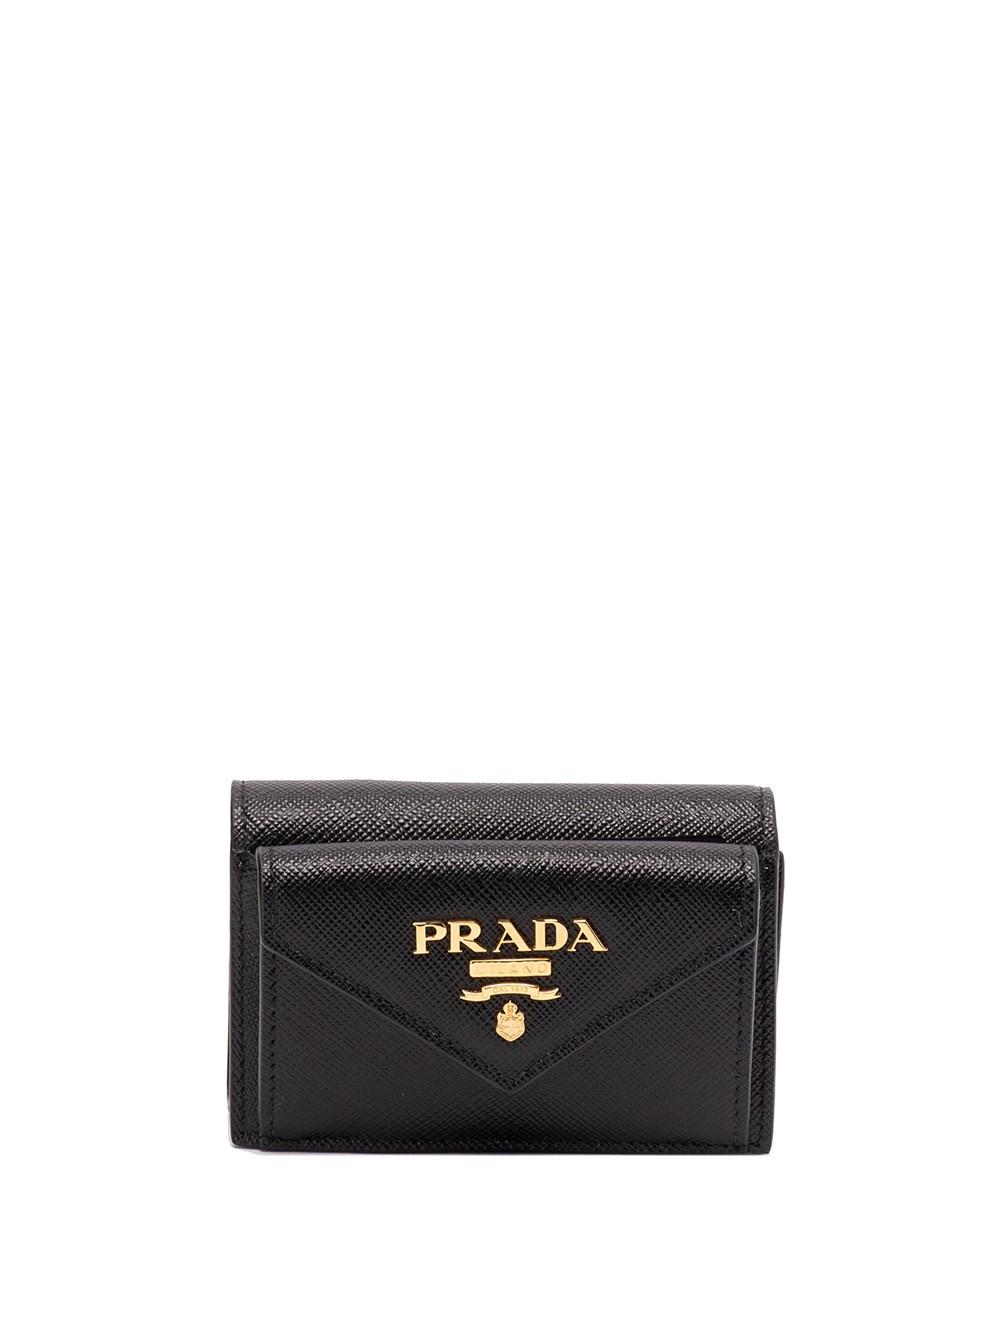 Prada Saffiano Leather Small Wallet